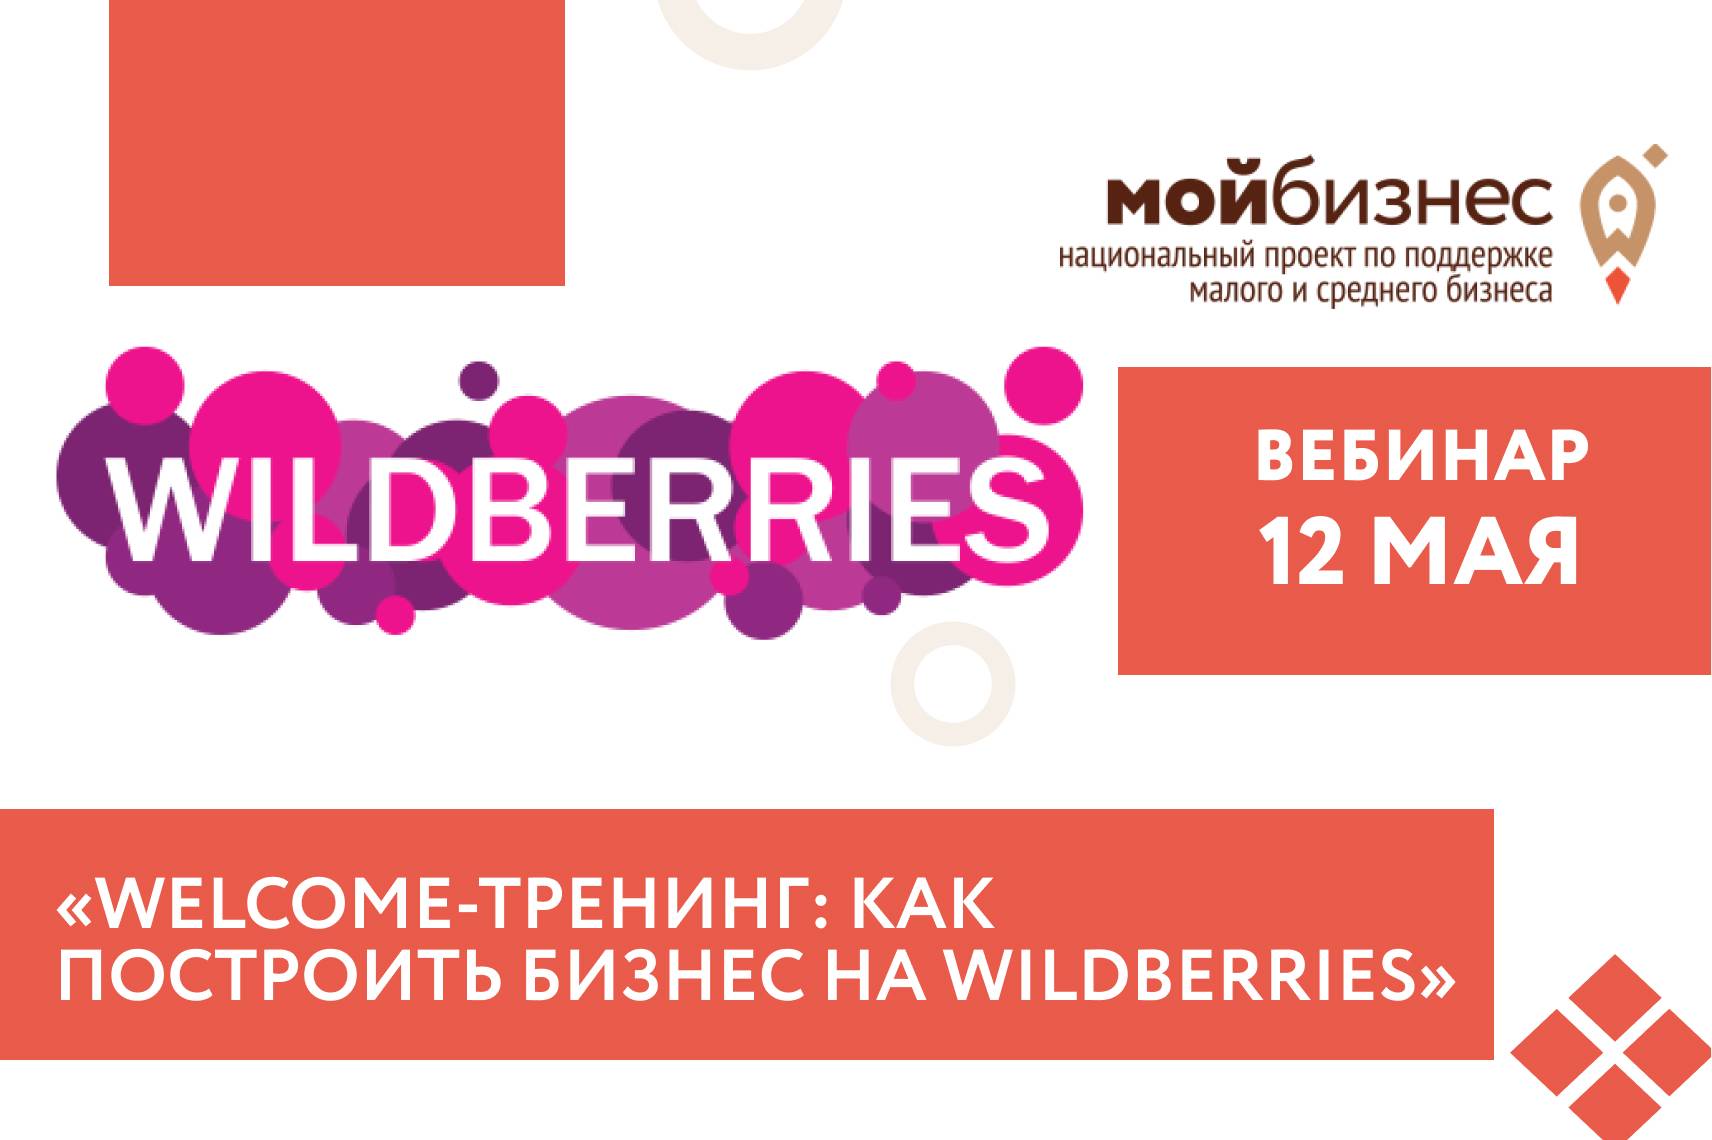 Wildberries вебинар